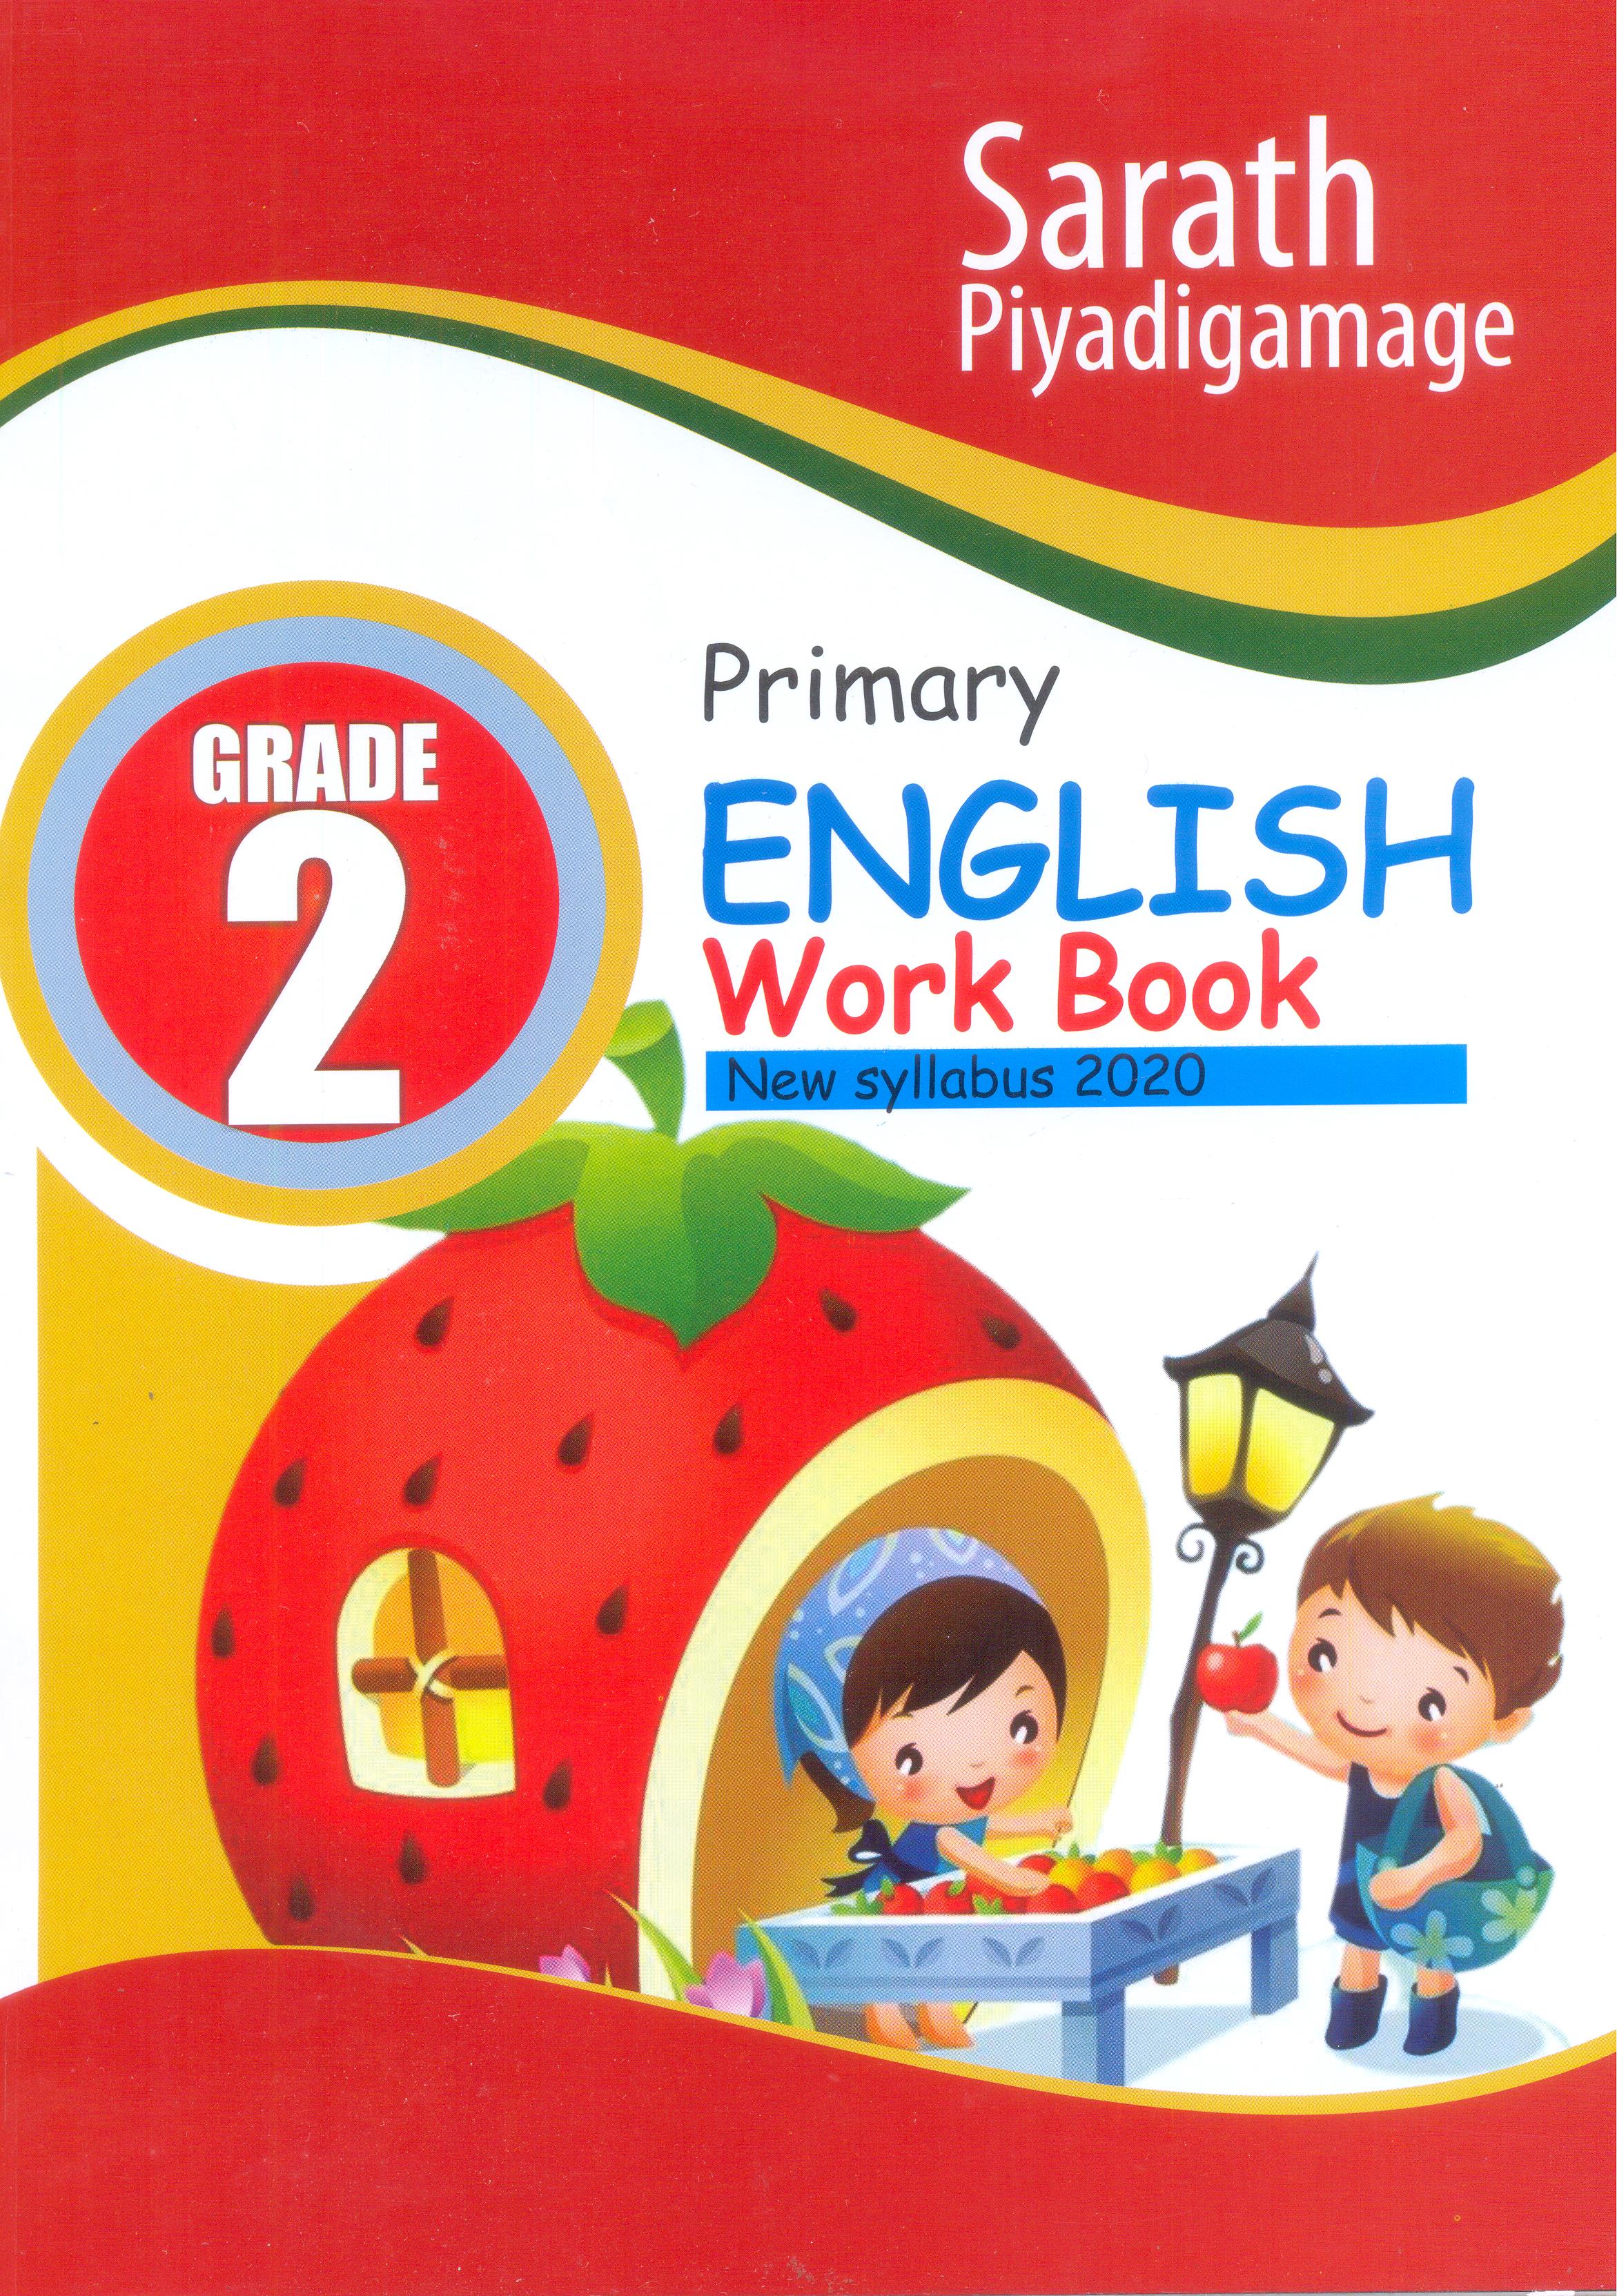 Primary English Work Book Grade 2 (New Syllabus 2020)